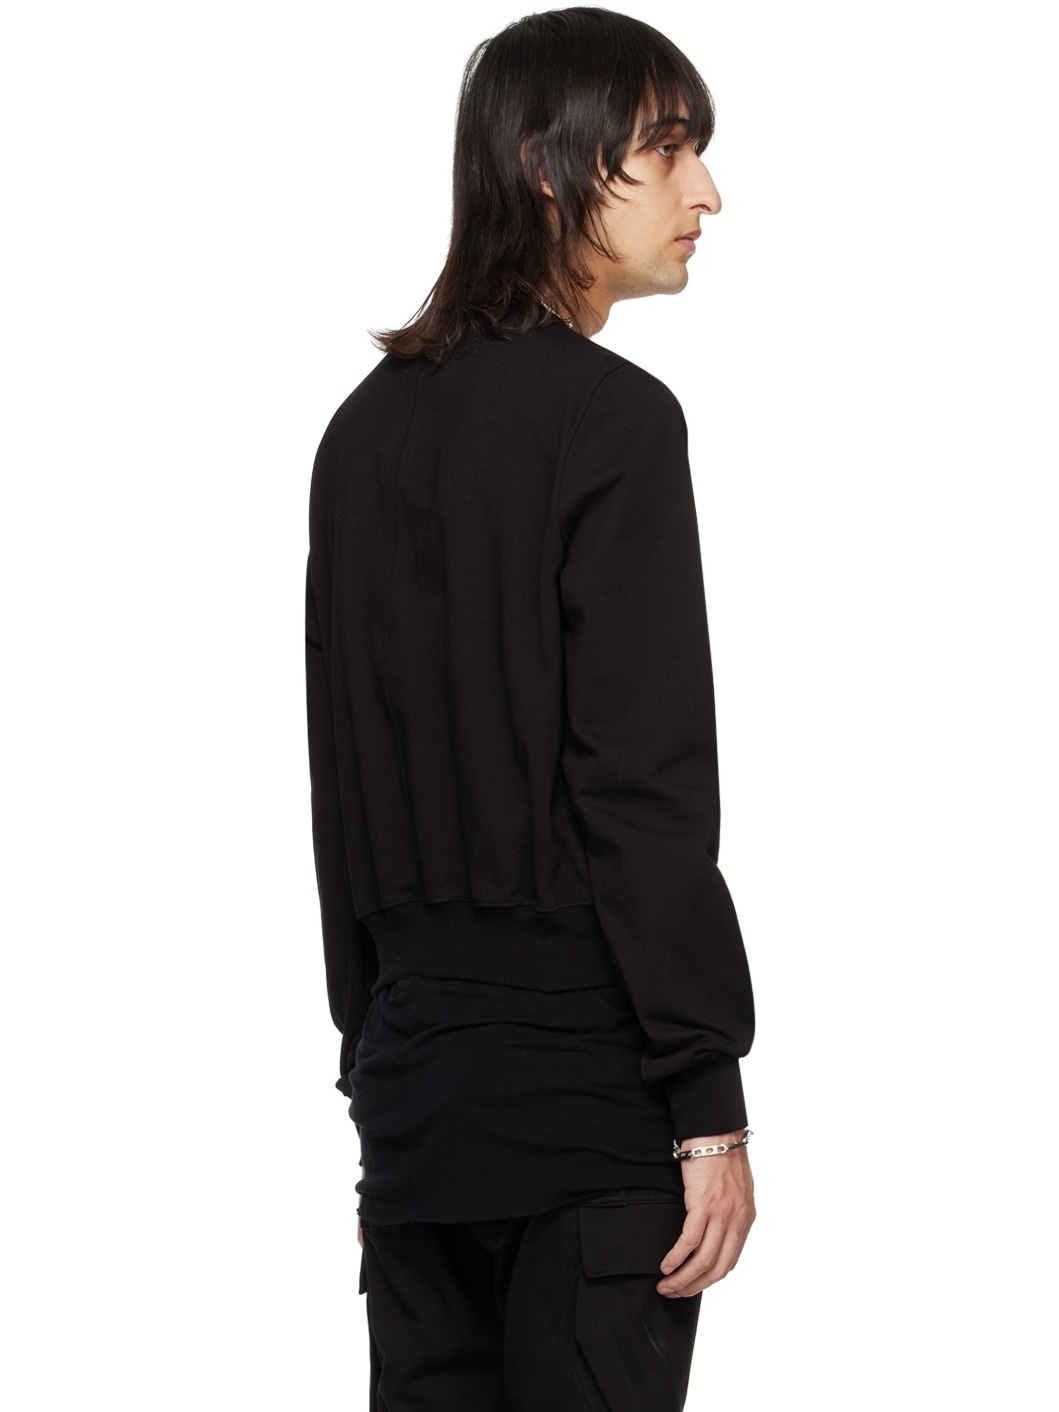 Black Cropped Sweatshirt - 3